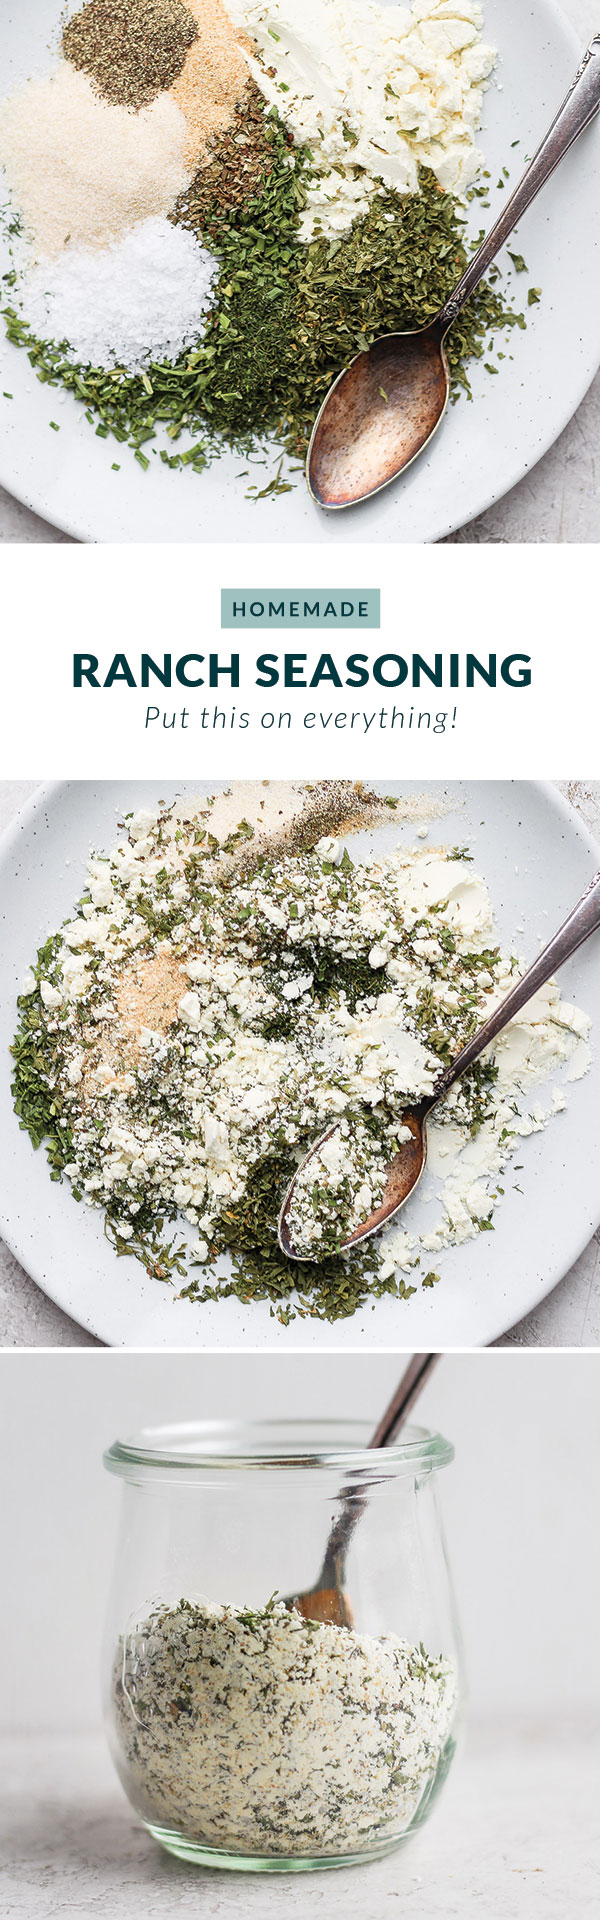 Ranch seasoning.